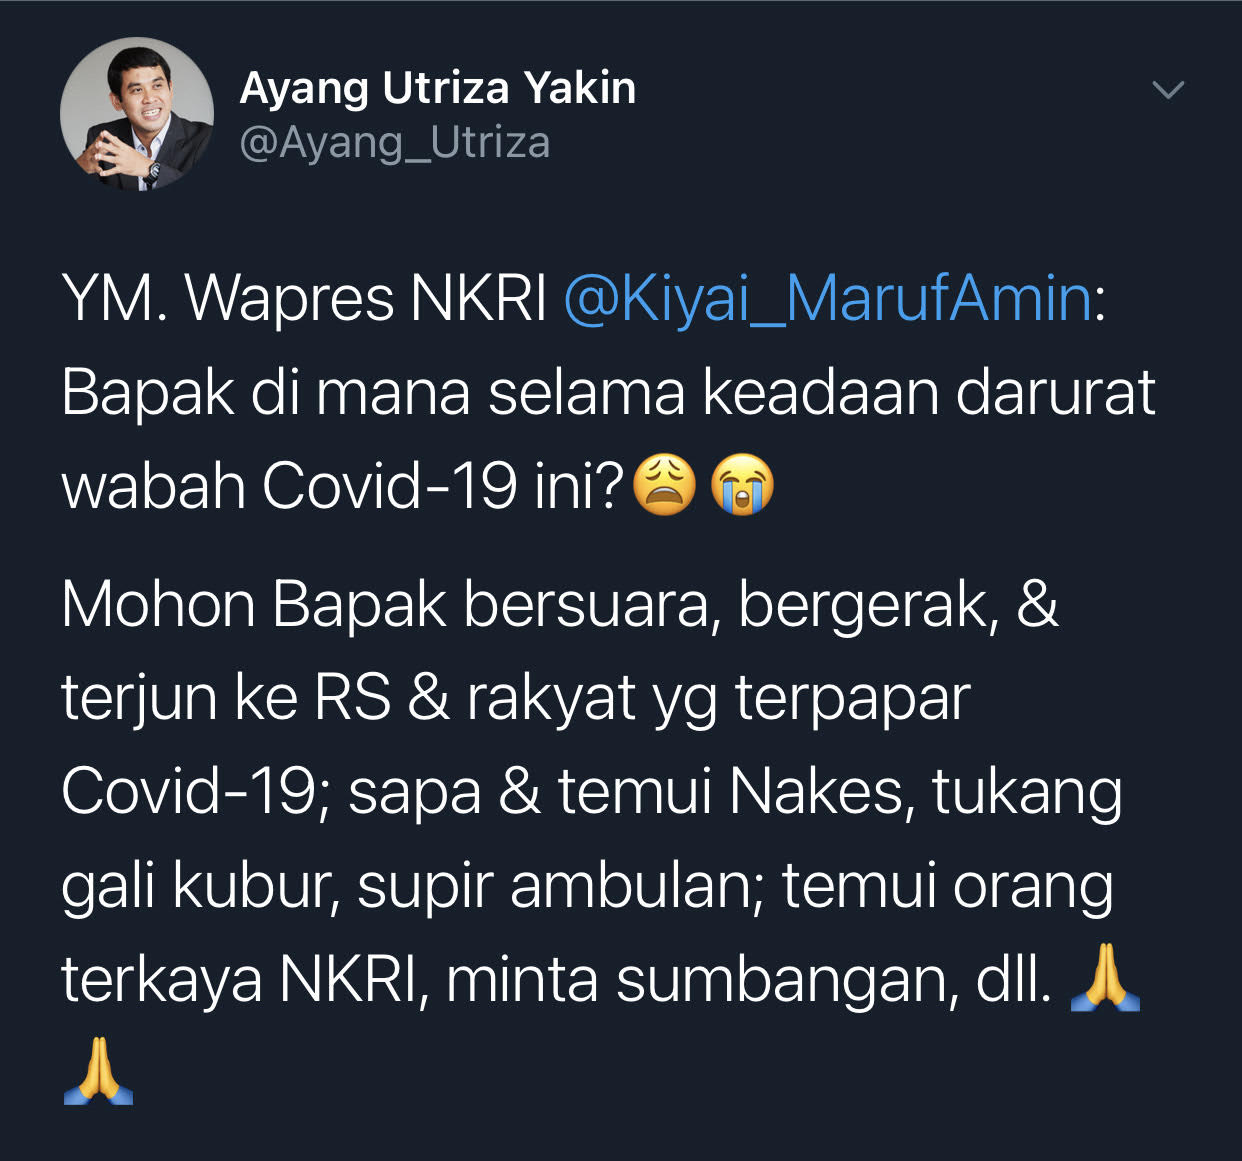 Cuitan Ayang Utriza yang mempertanyakan keberadaan Wapres Ma'ruf Amin di tengah darurat Covid-19 di Indonesia.